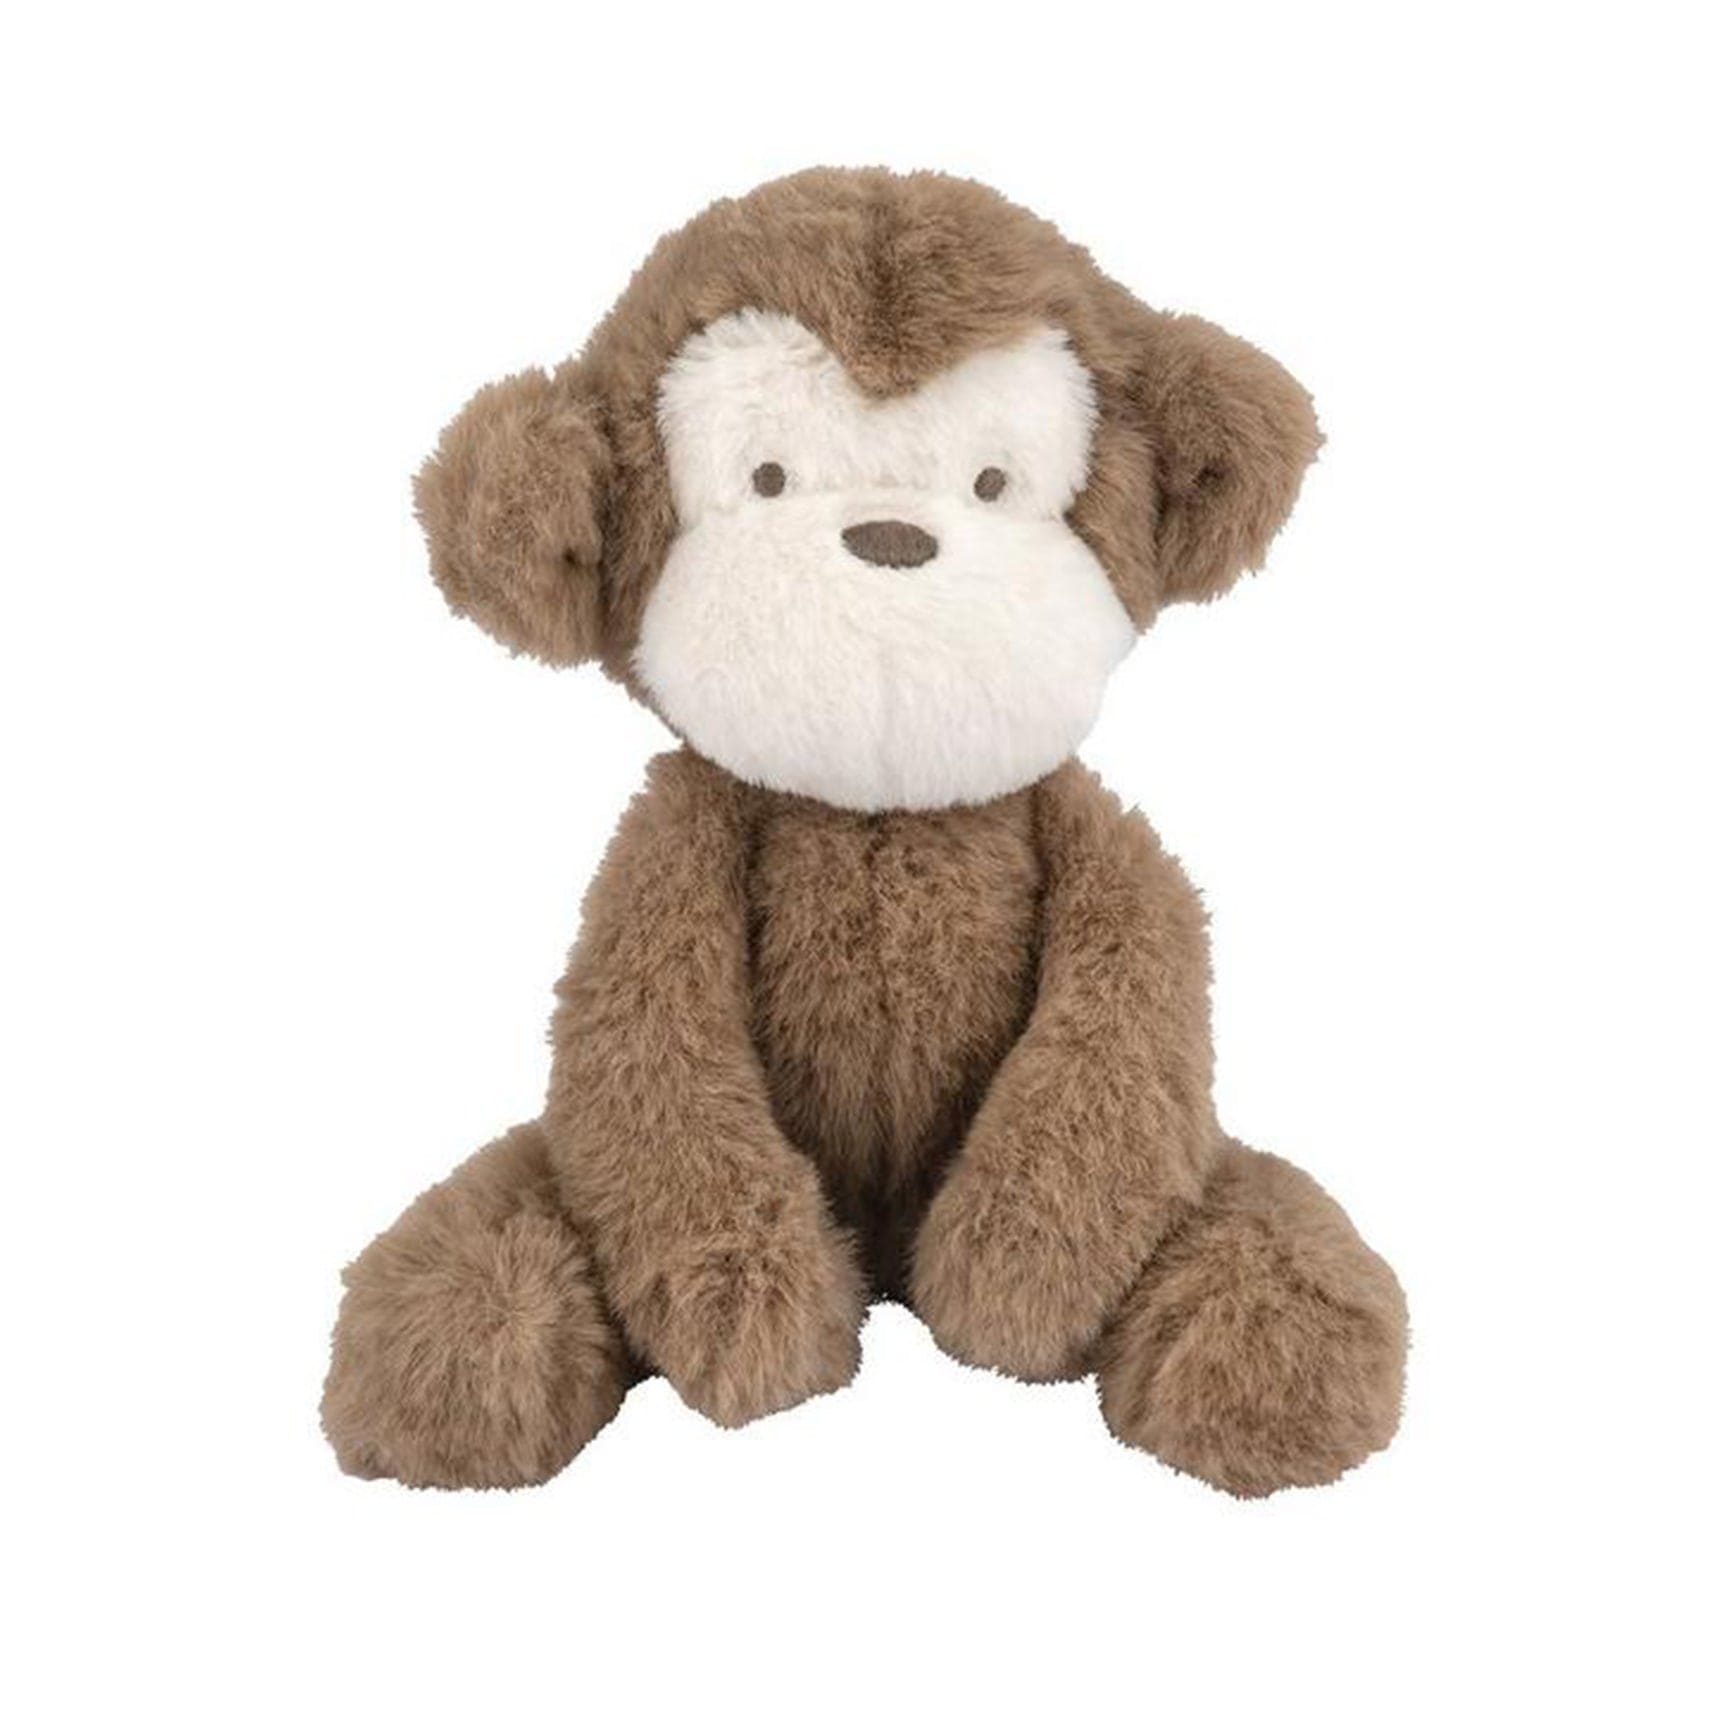 Mamas & Papas soft animals Mamas & Papas Soft Toy Welcome to the World - Monty Monkey 4855MR301